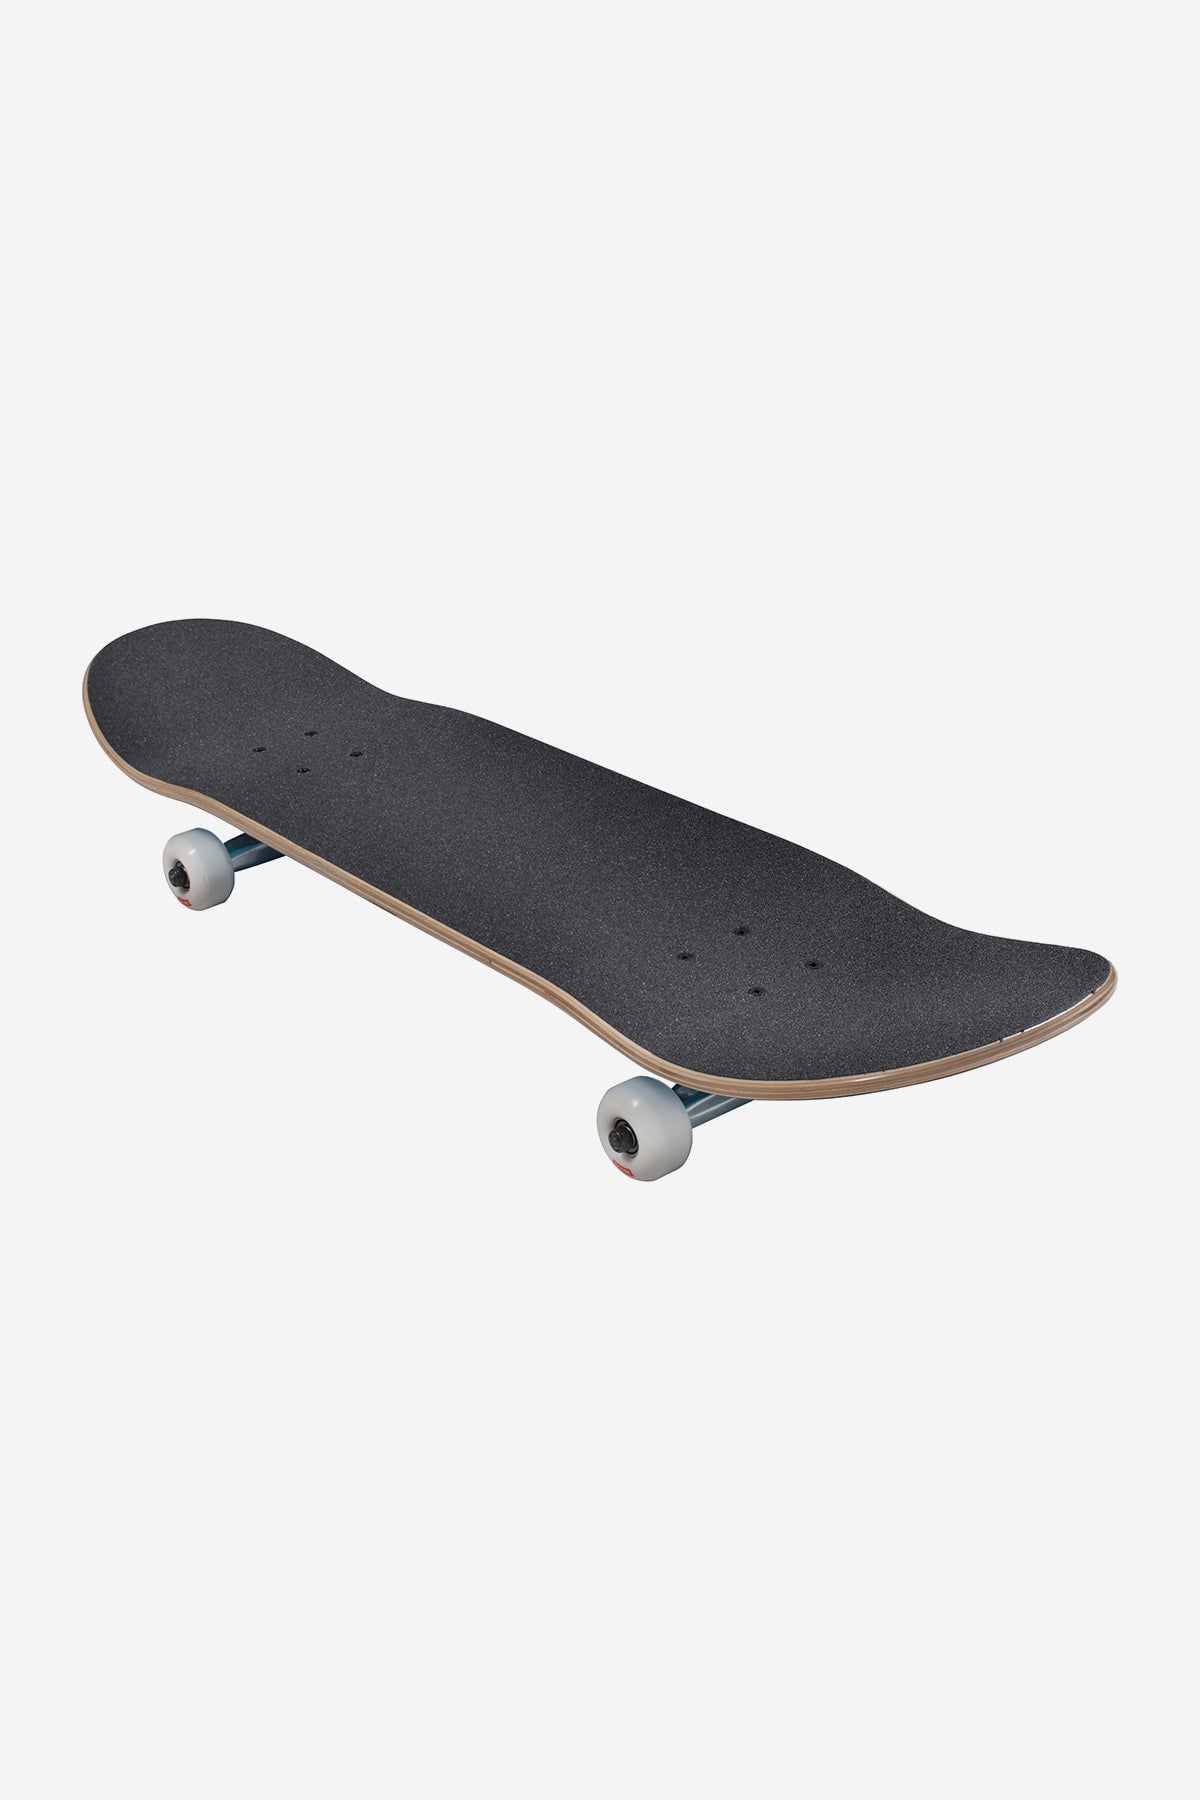 Globe - Goodstock - Clay - 8,5" Compleet Skateboard